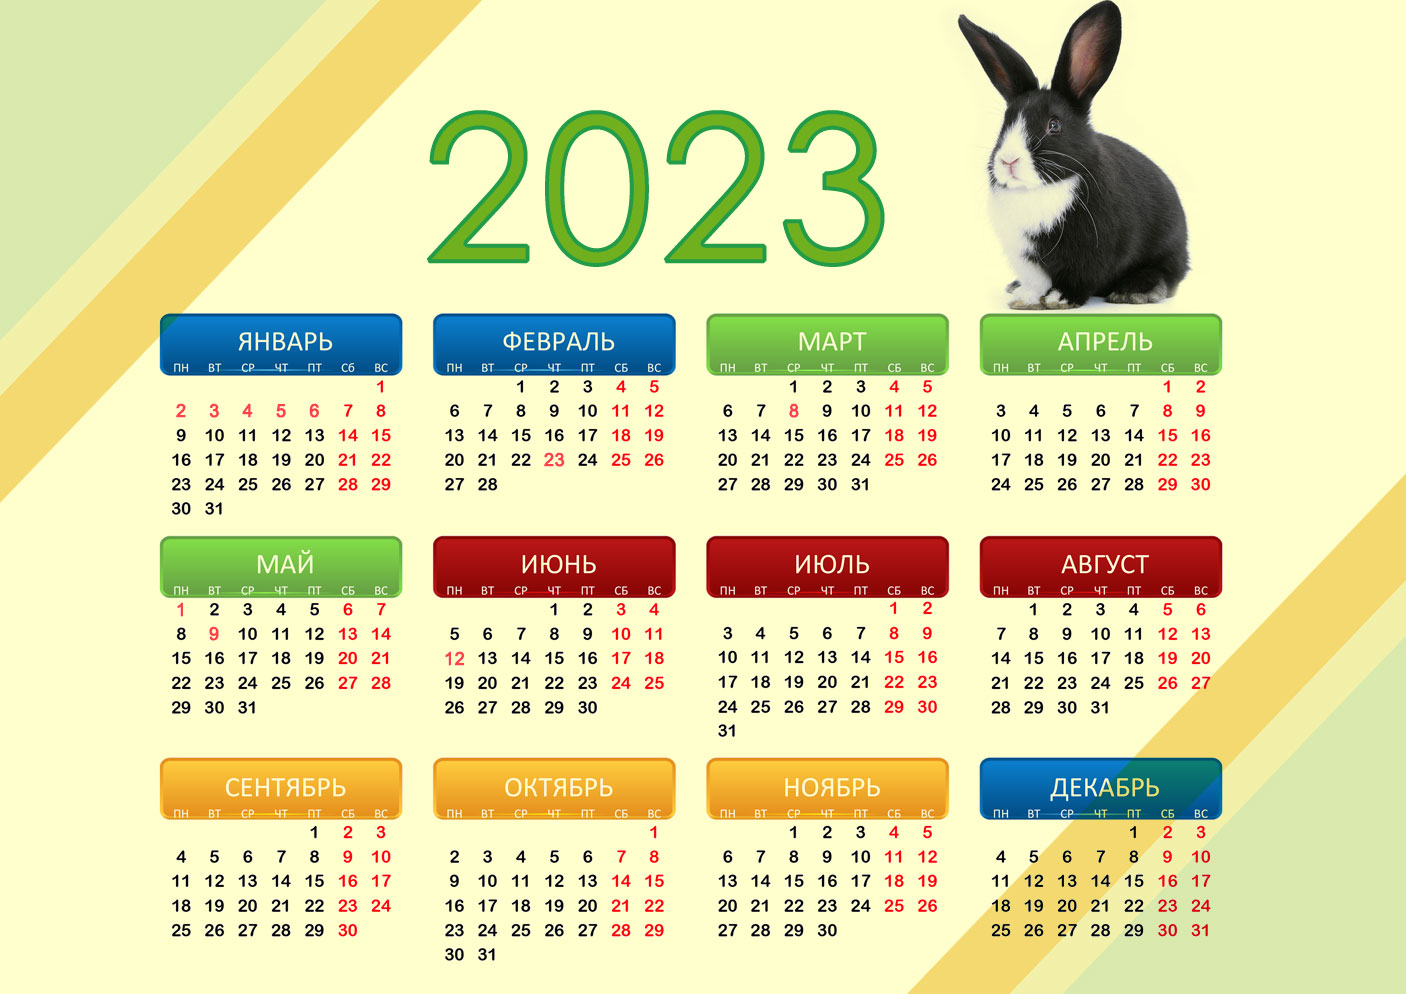 Календарь на 2024 год Дракона